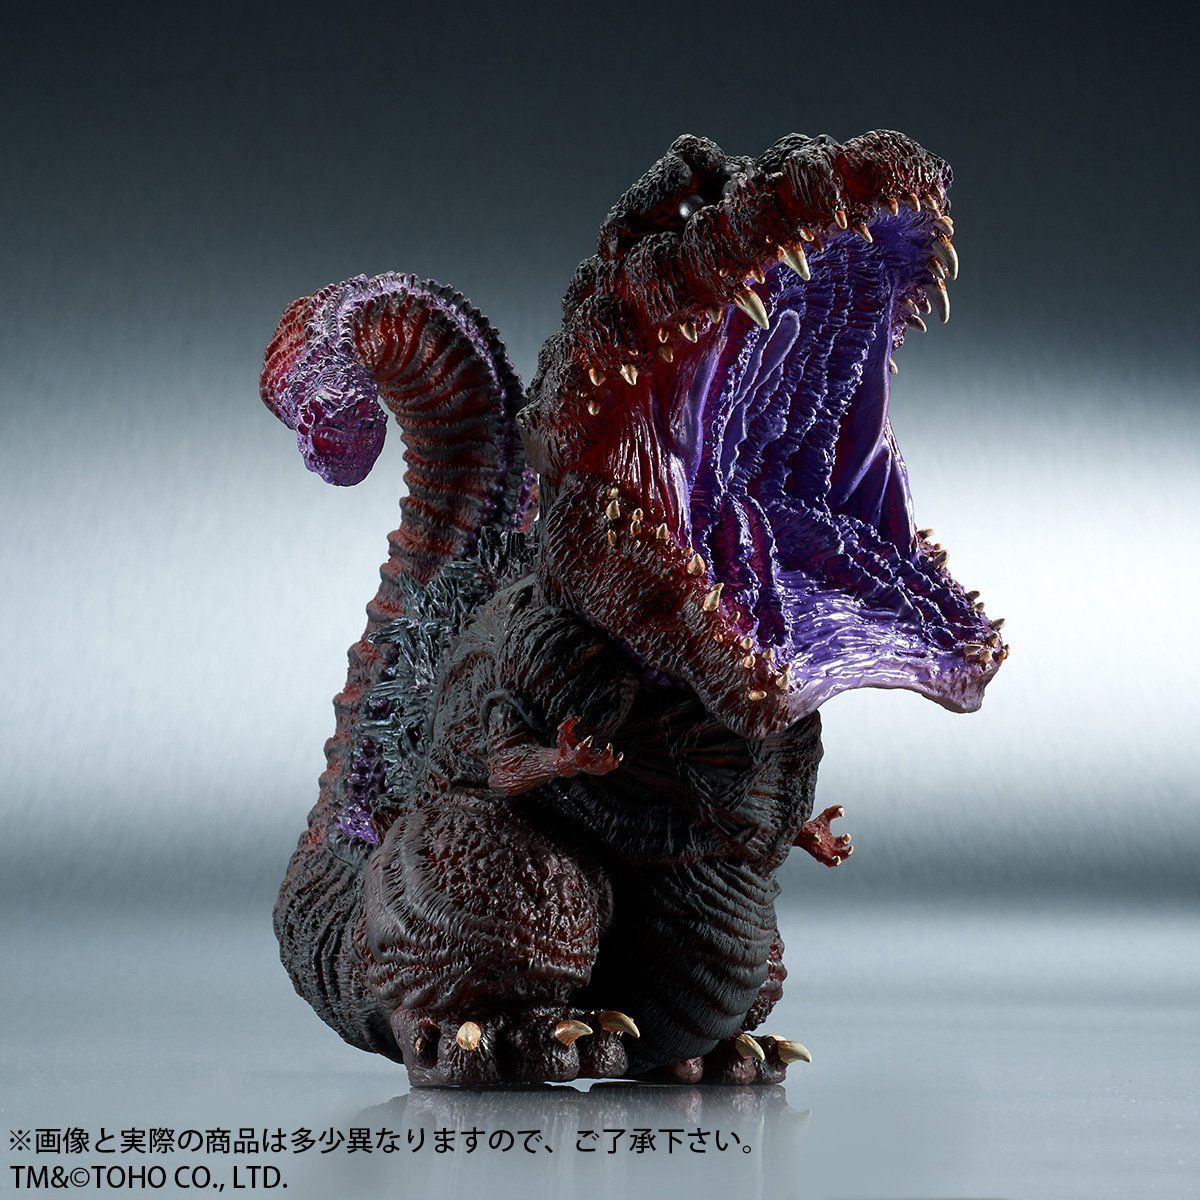 Bandai Premium Limited Toho Toei Japan X-PLUS Deforeal Godzilla 2016 Frozen ver 